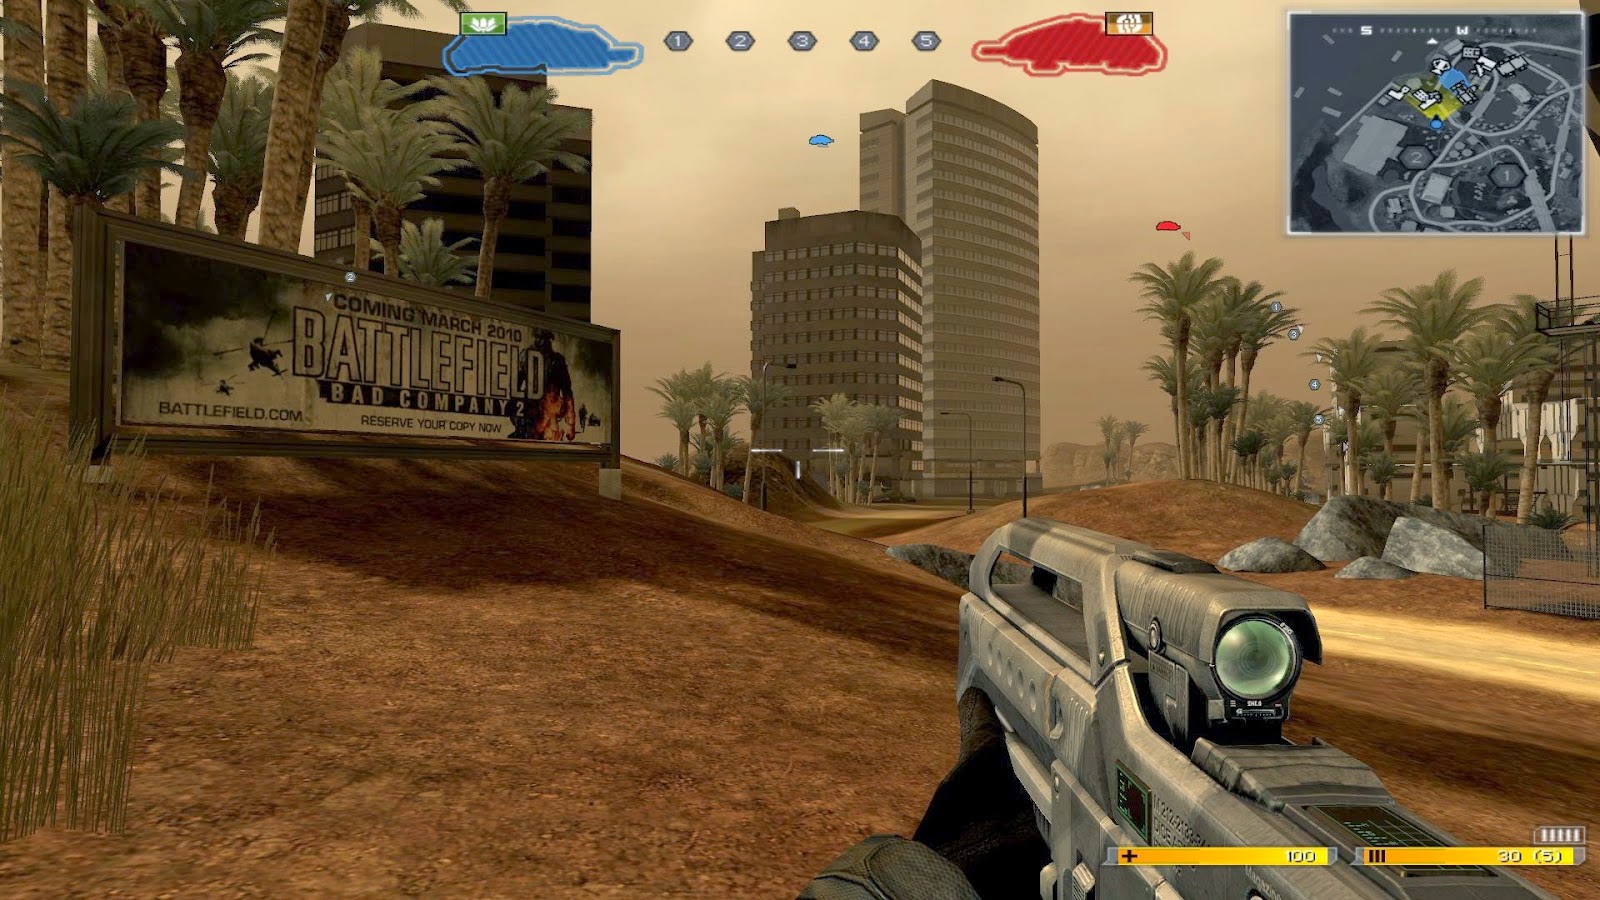 Download Game PC Gratis Battlefield 2142 Full Version - game lawas